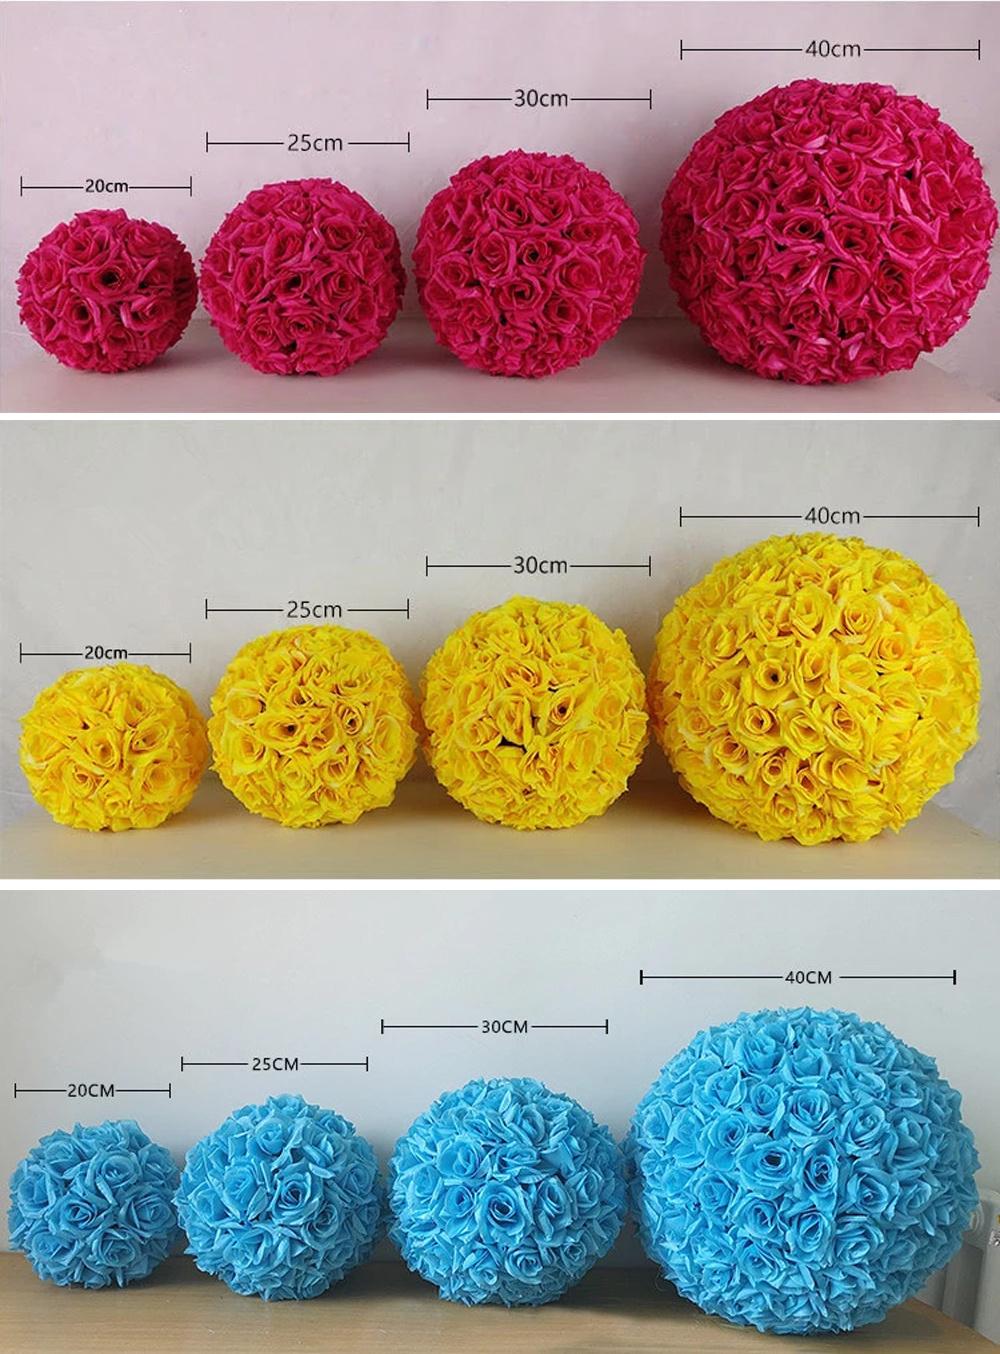 Decorative Arrangements Artificial Flower Balls for Wedding Table Centerpiece